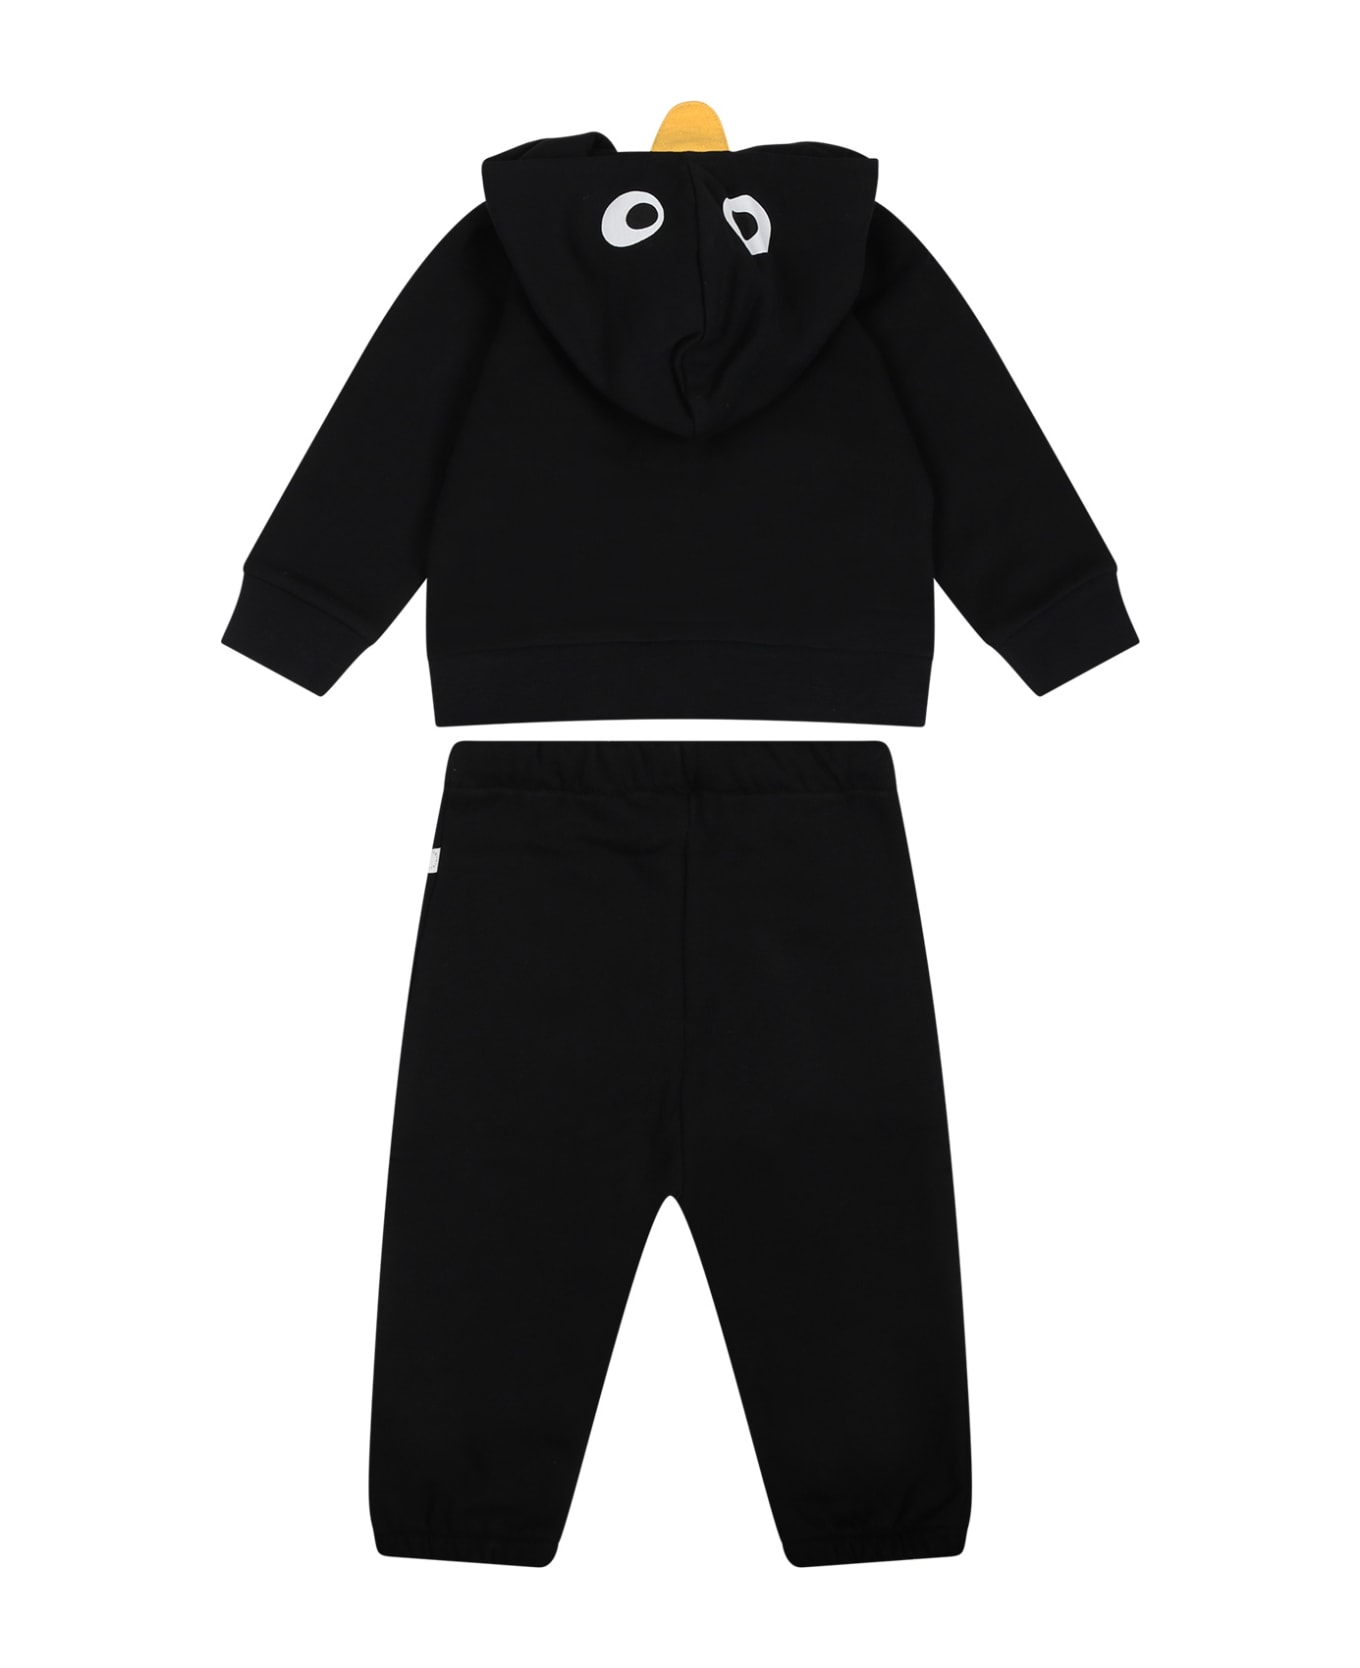 Stella McCartney Kids Black Suit For Baby Boy With Print - Black